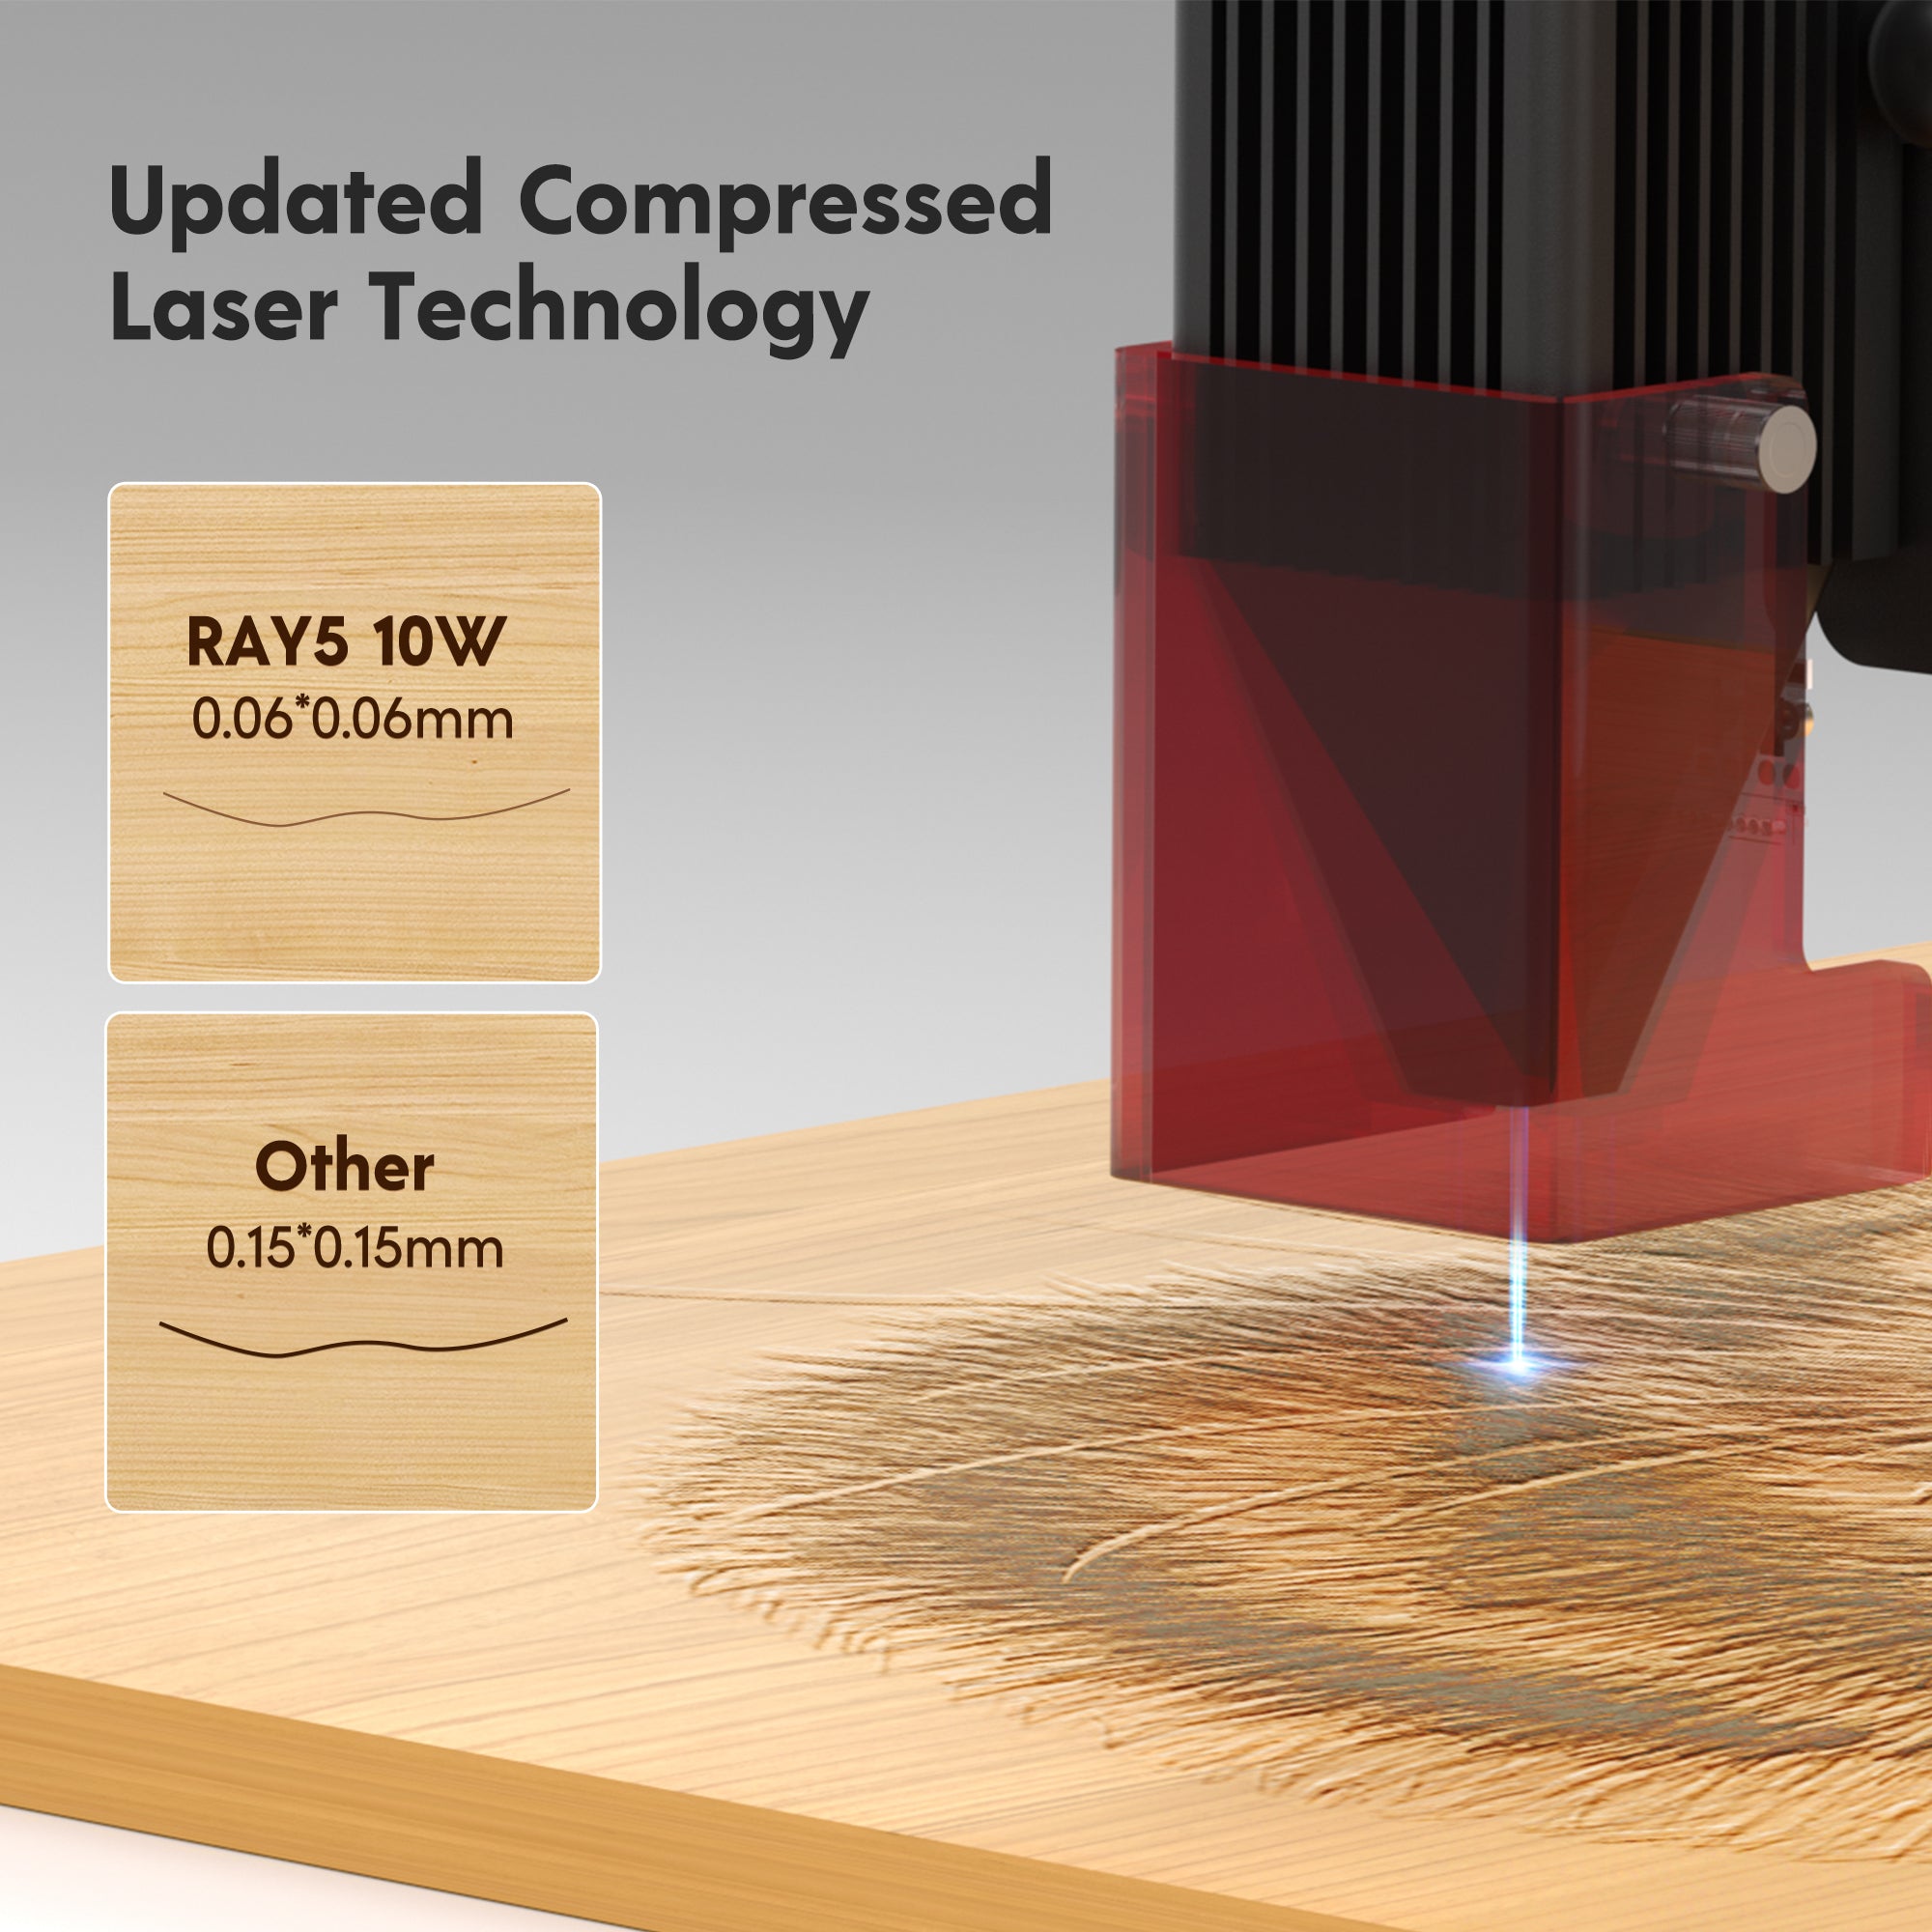 Incisore laser Ray5 10w